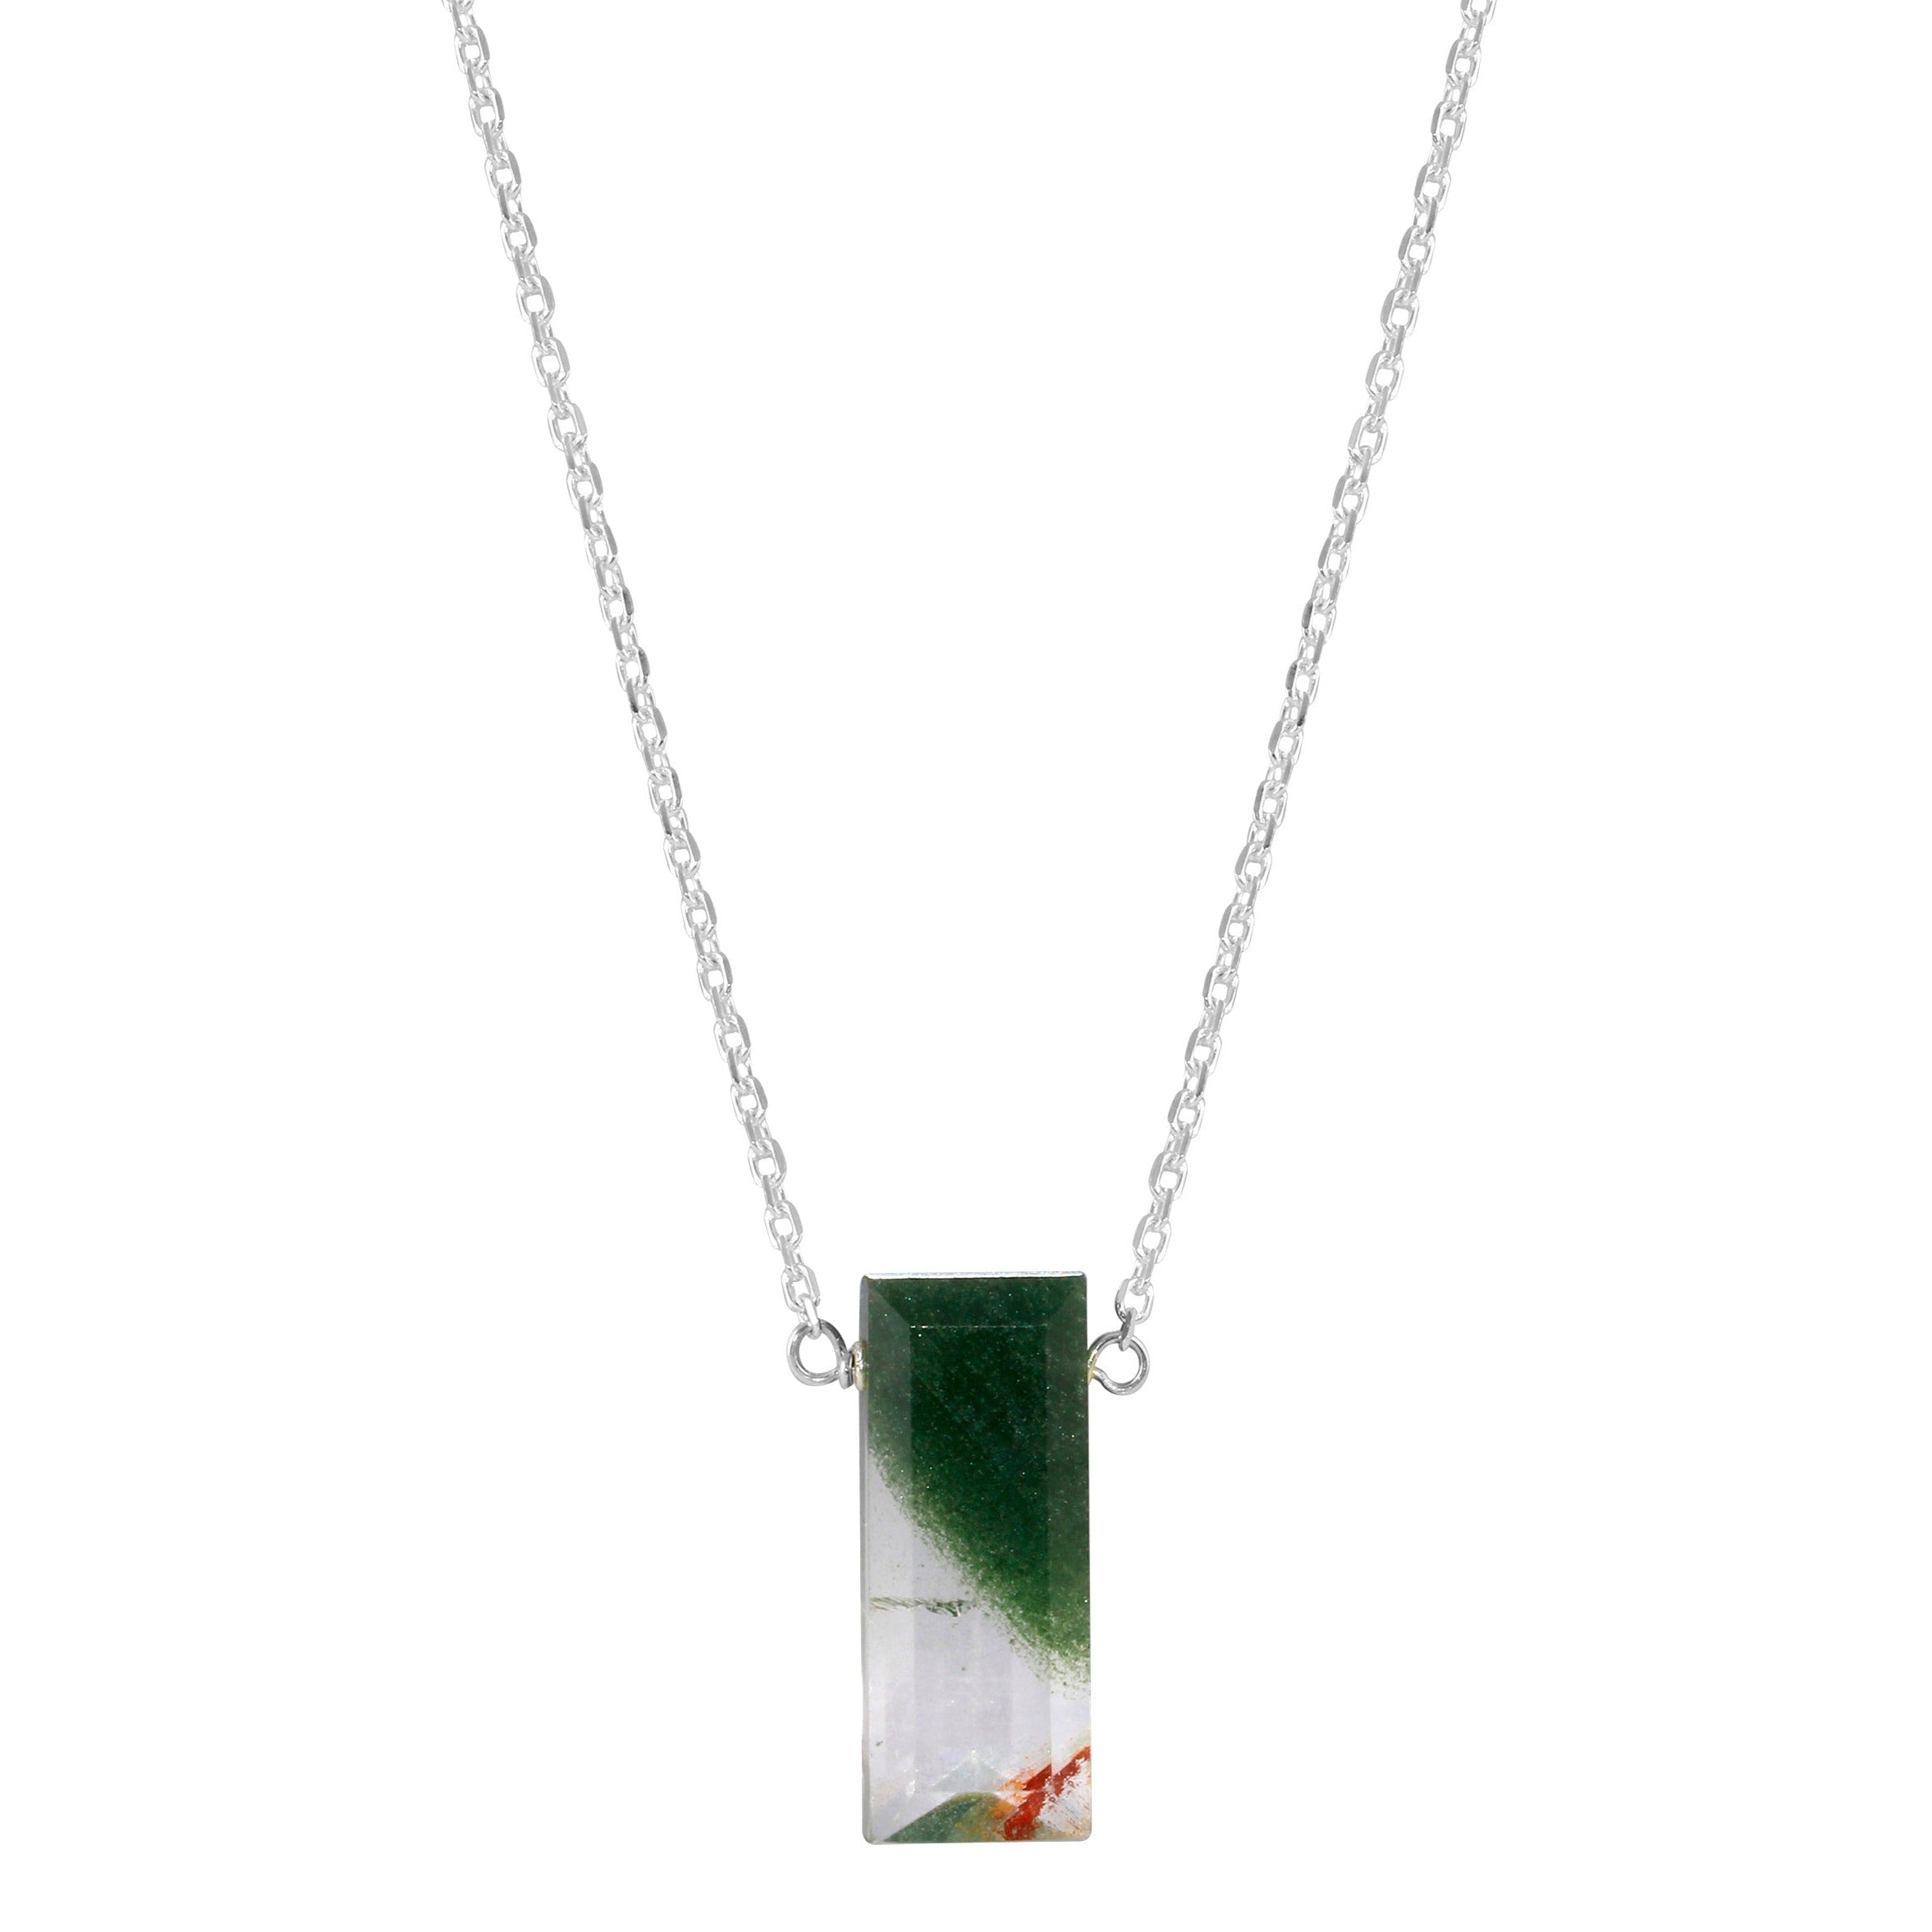 Garden Quartz necklace - sterling silver or gold filled | Little Rock Collection necklace Amanda K Lockrow